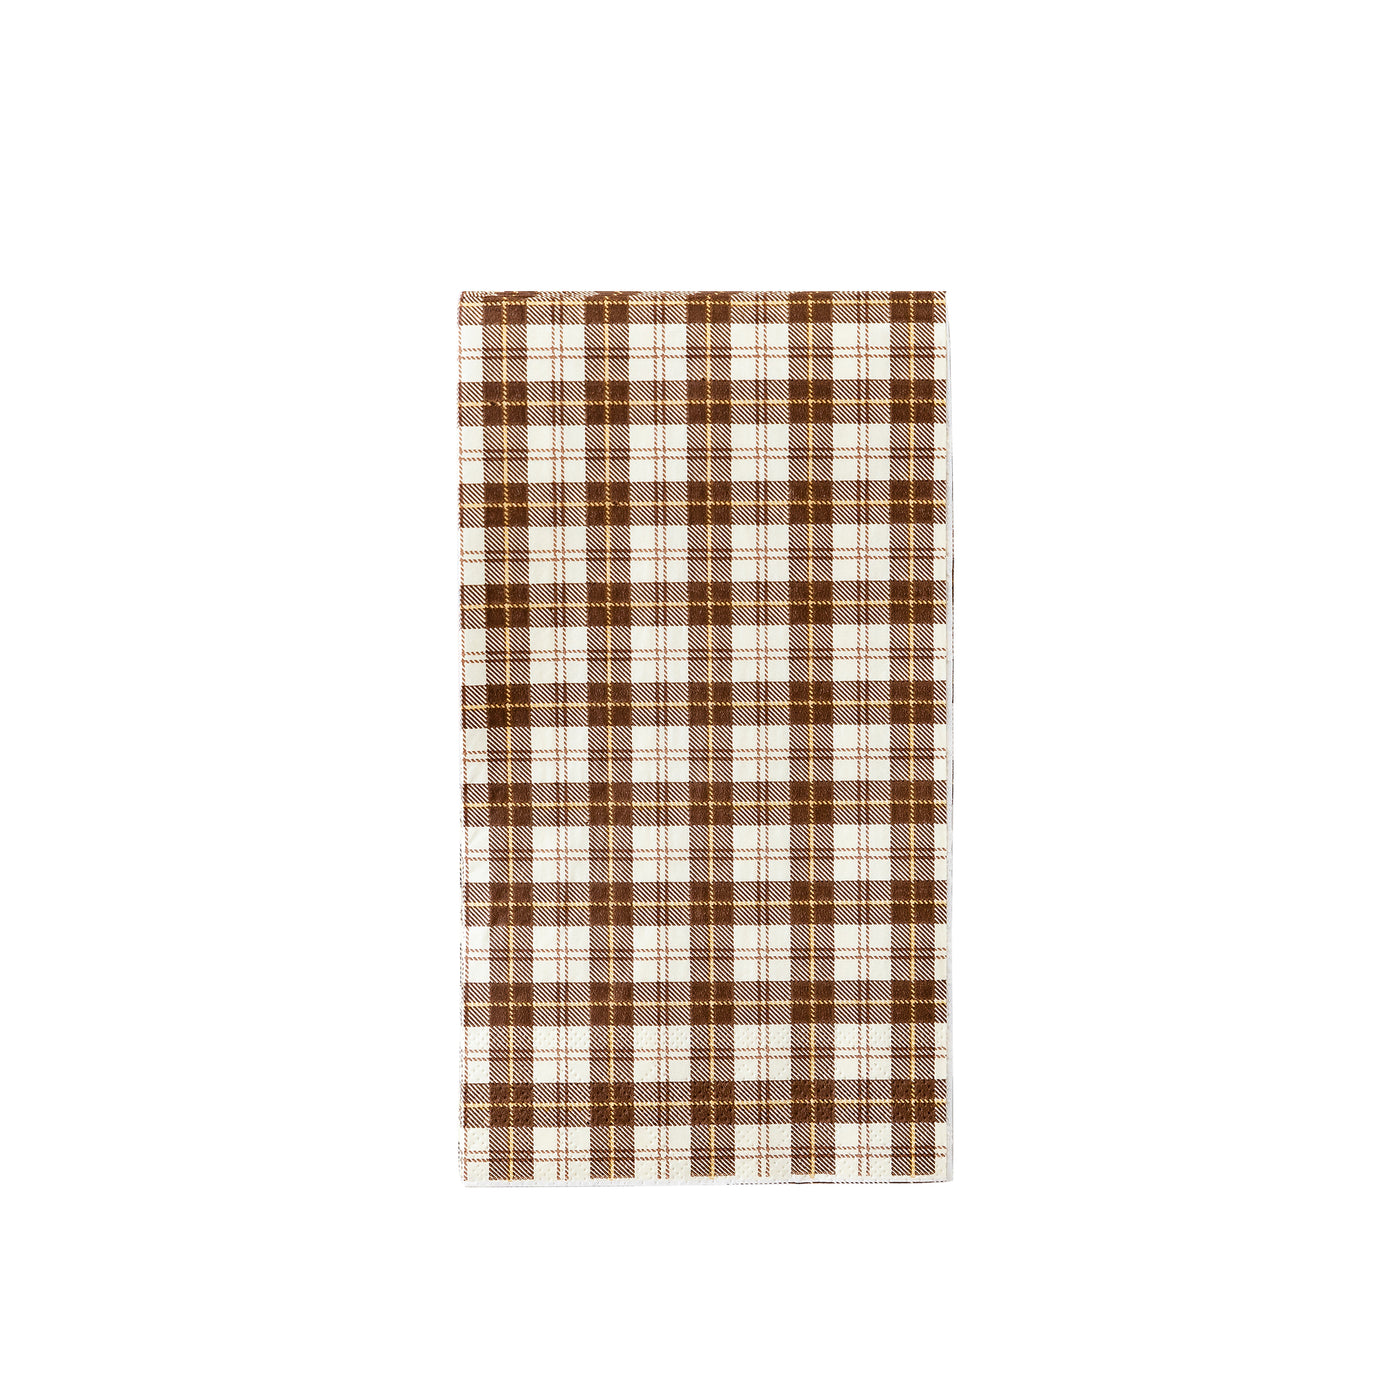 THP1037 - Harvest Brown Plaid Paper Dinner Napkin